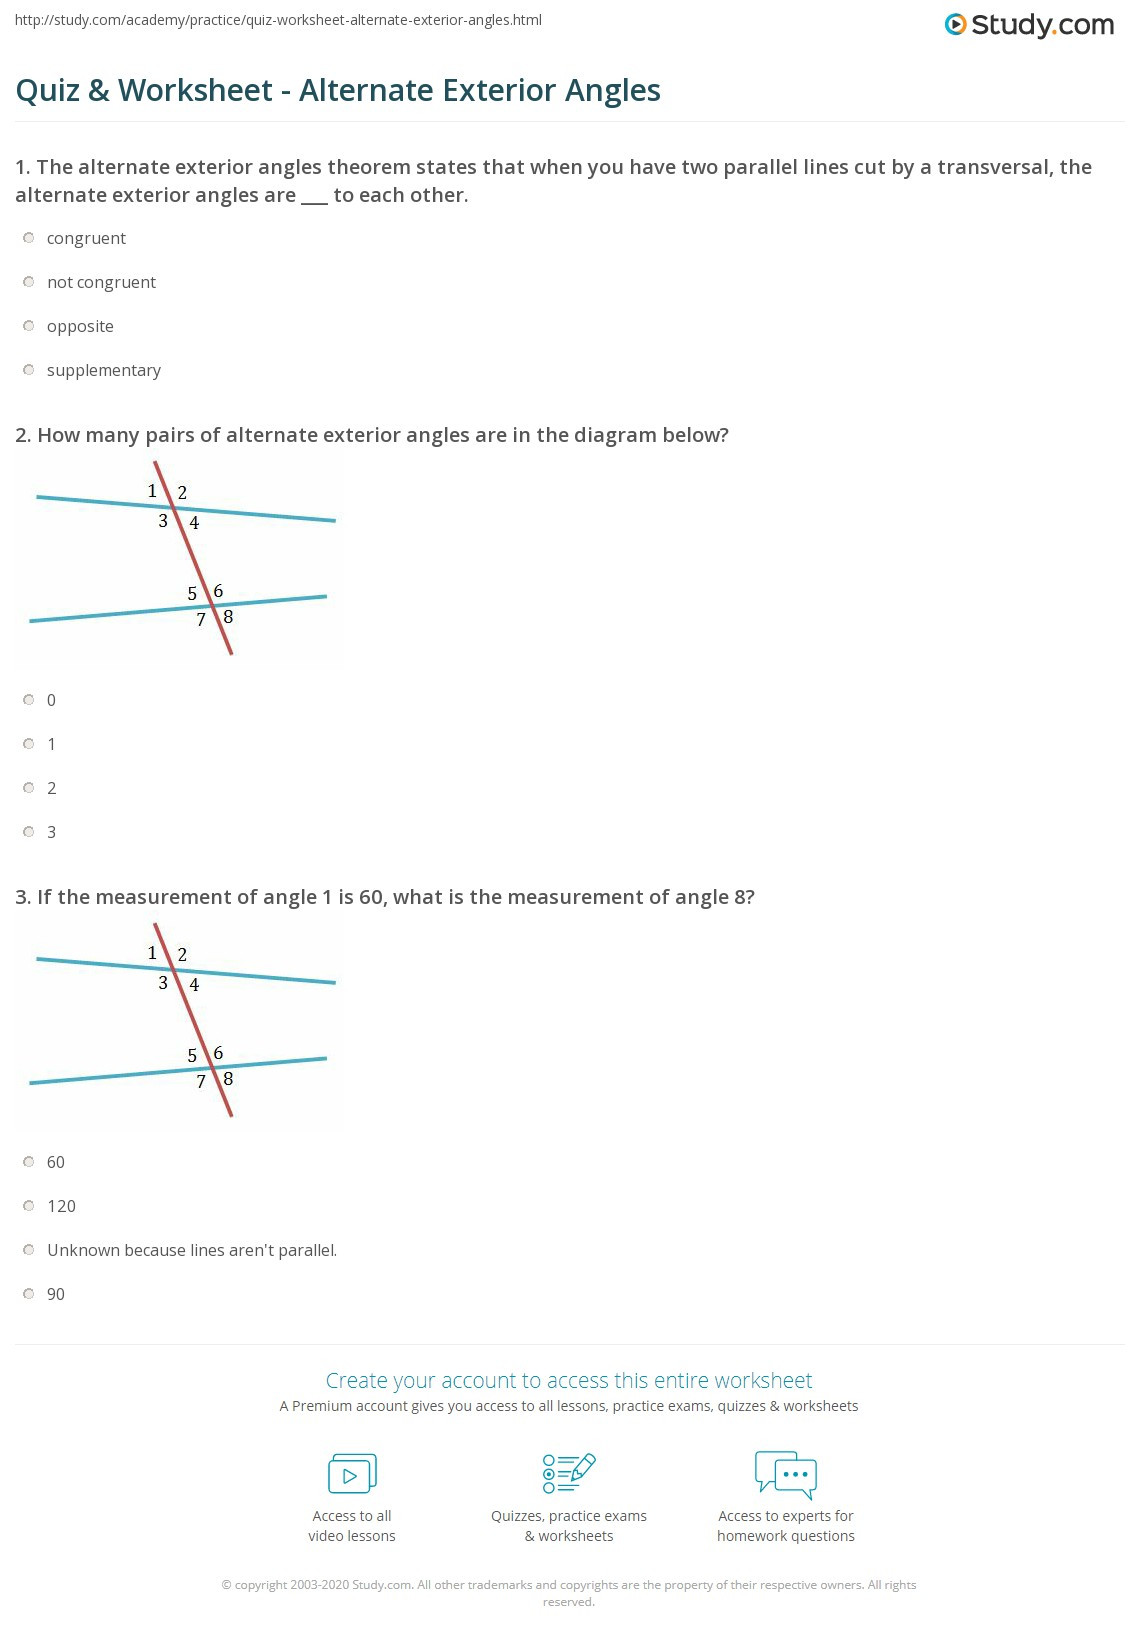 Exterior Angle theorem Worksheet Quiz &amp; Worksheet Alternate Exterior Angles